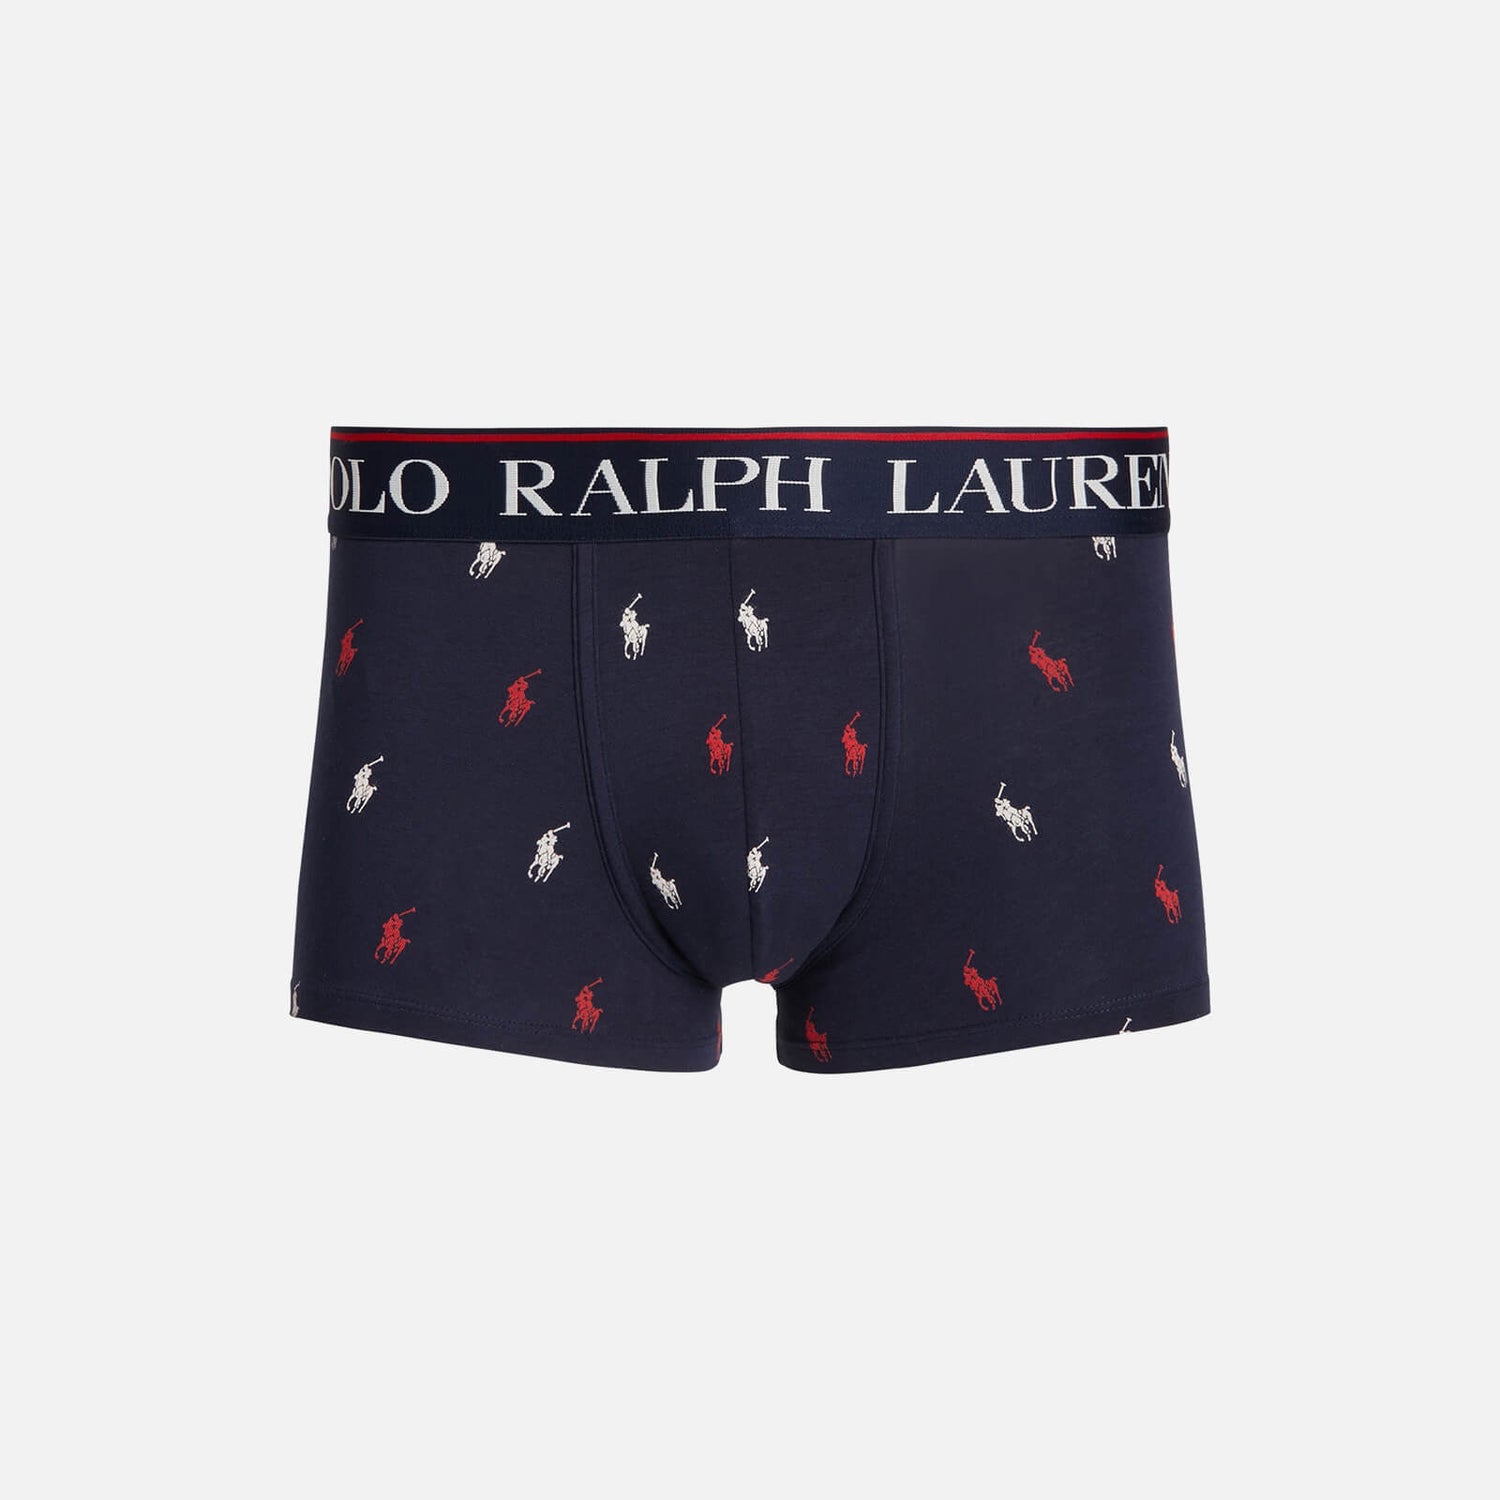 Polo Ralph Lauren Men's Cotton Printed Trunks - Cruise Navy AOPP